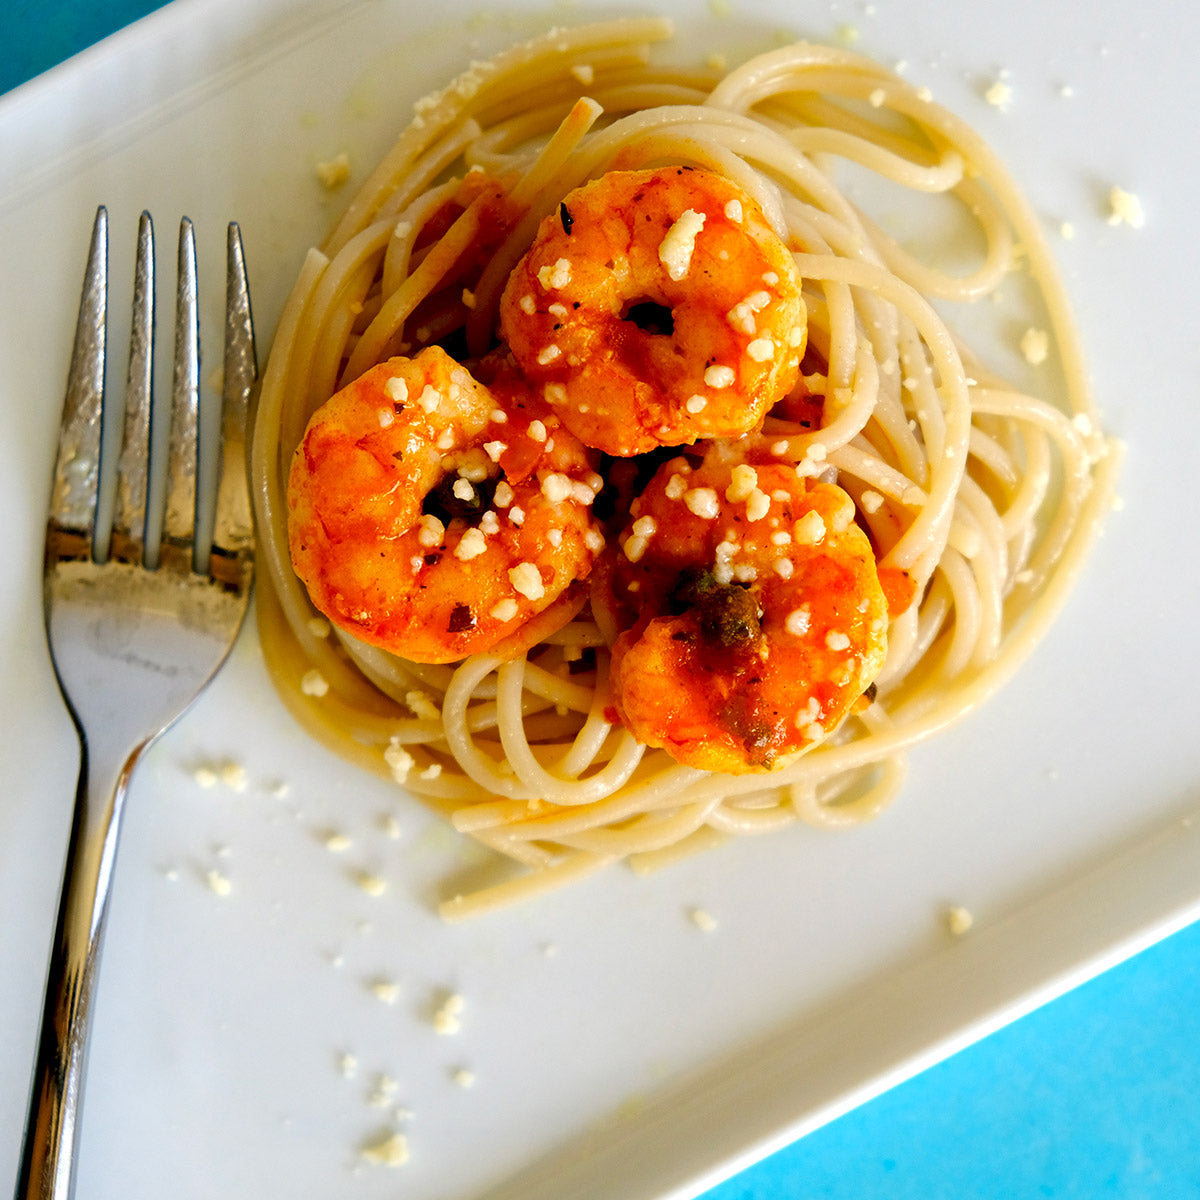 Agrozimi Spelt Spaghetti all-natural artisanal Greek pasta